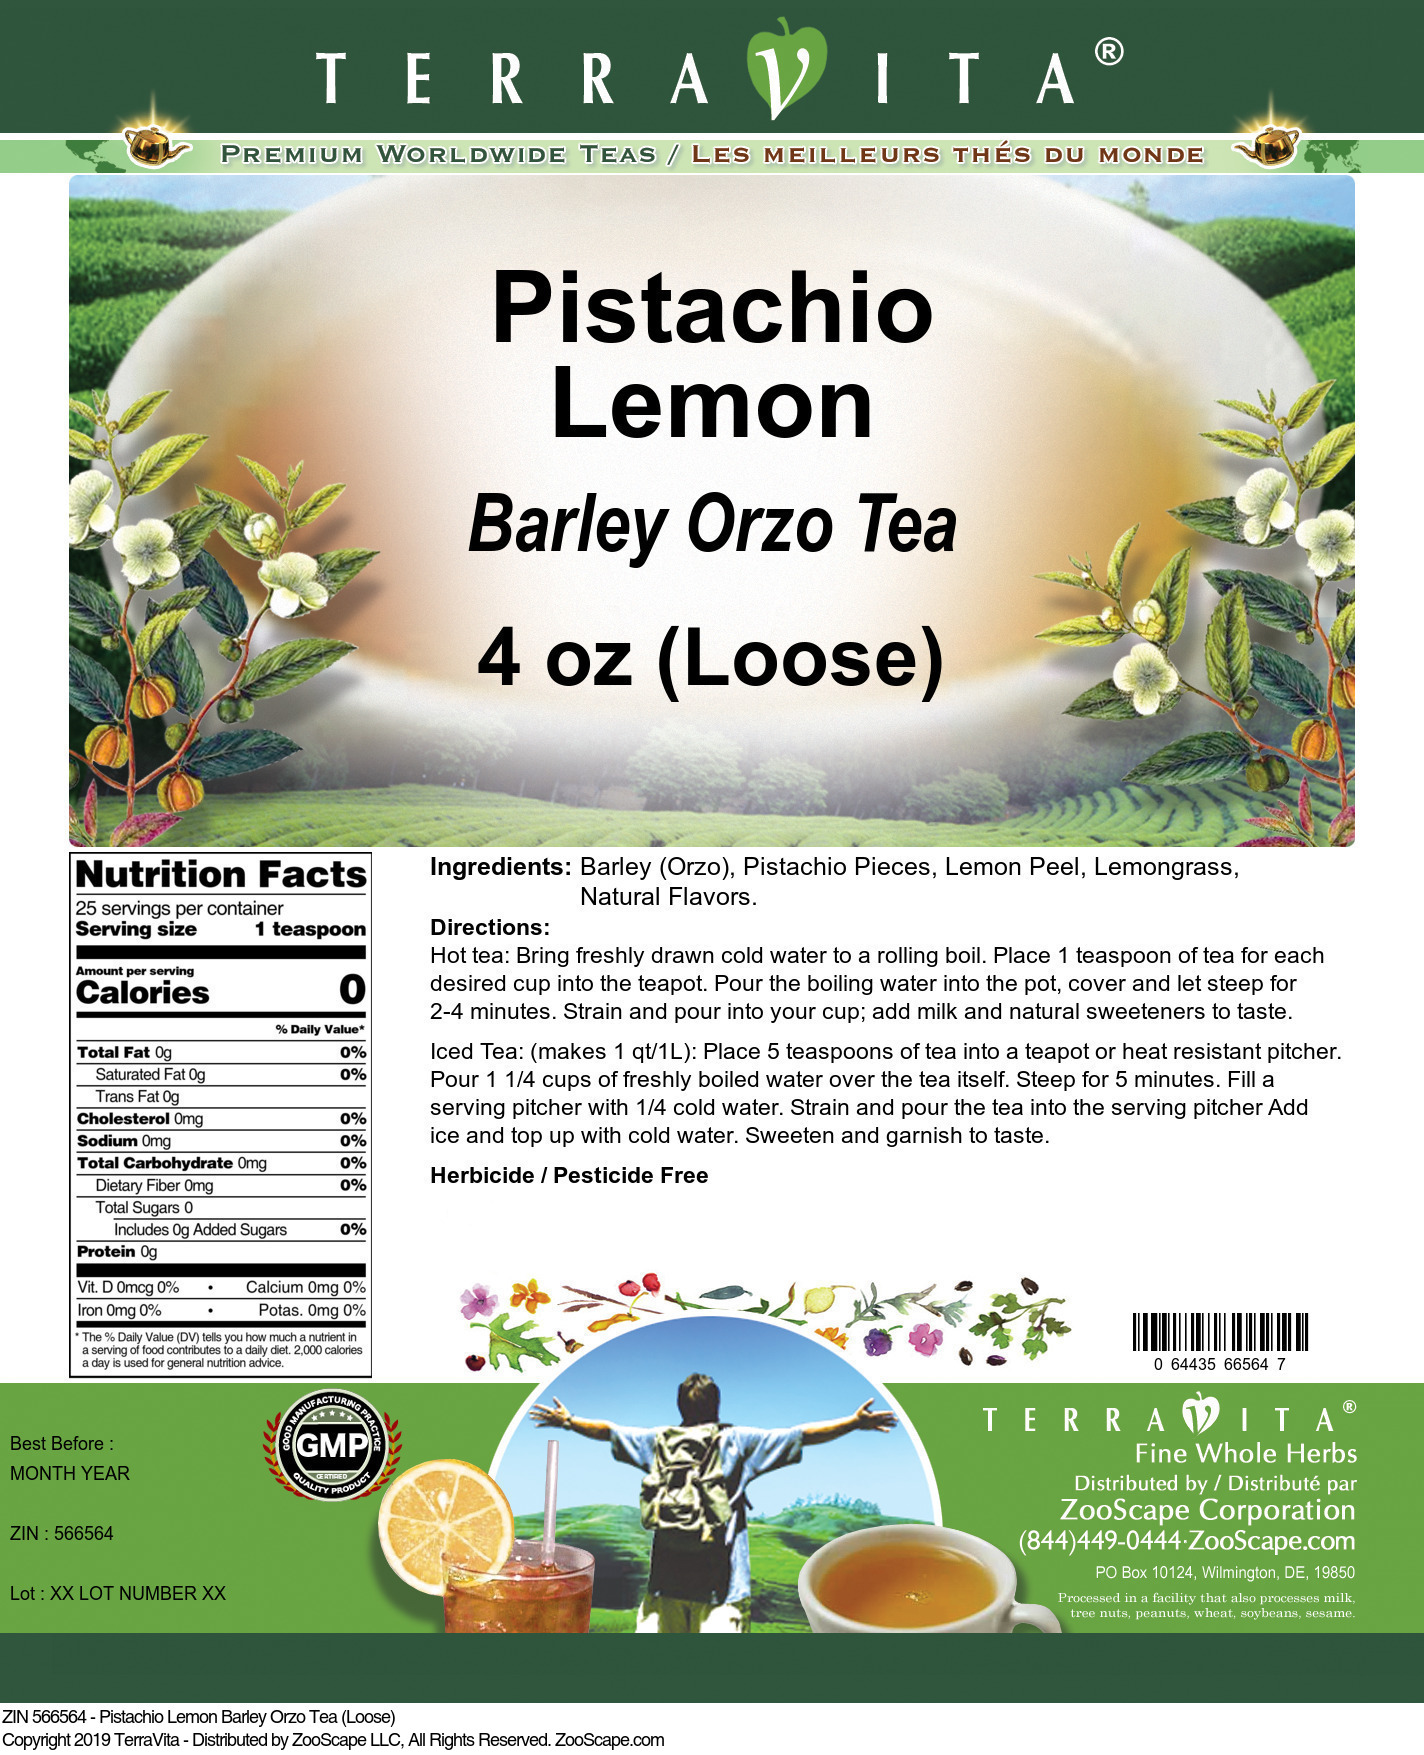 Pistachio Lemon Barley Orzo Tea (Loose) - Label